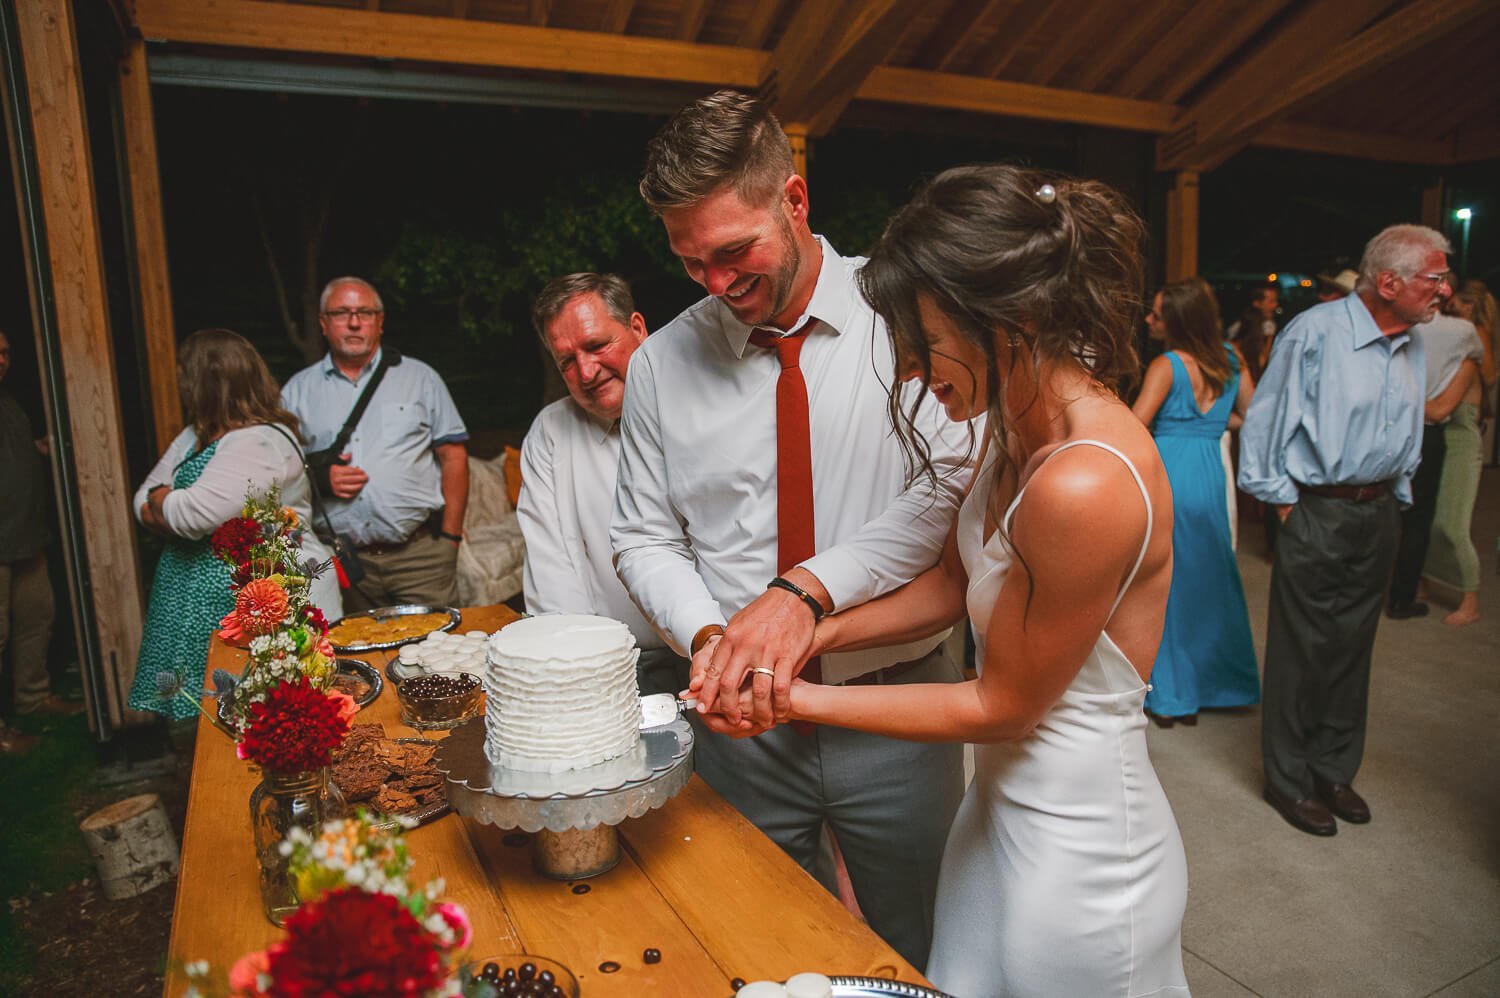 colorado-wedding-cake-cutting-photos.jpg